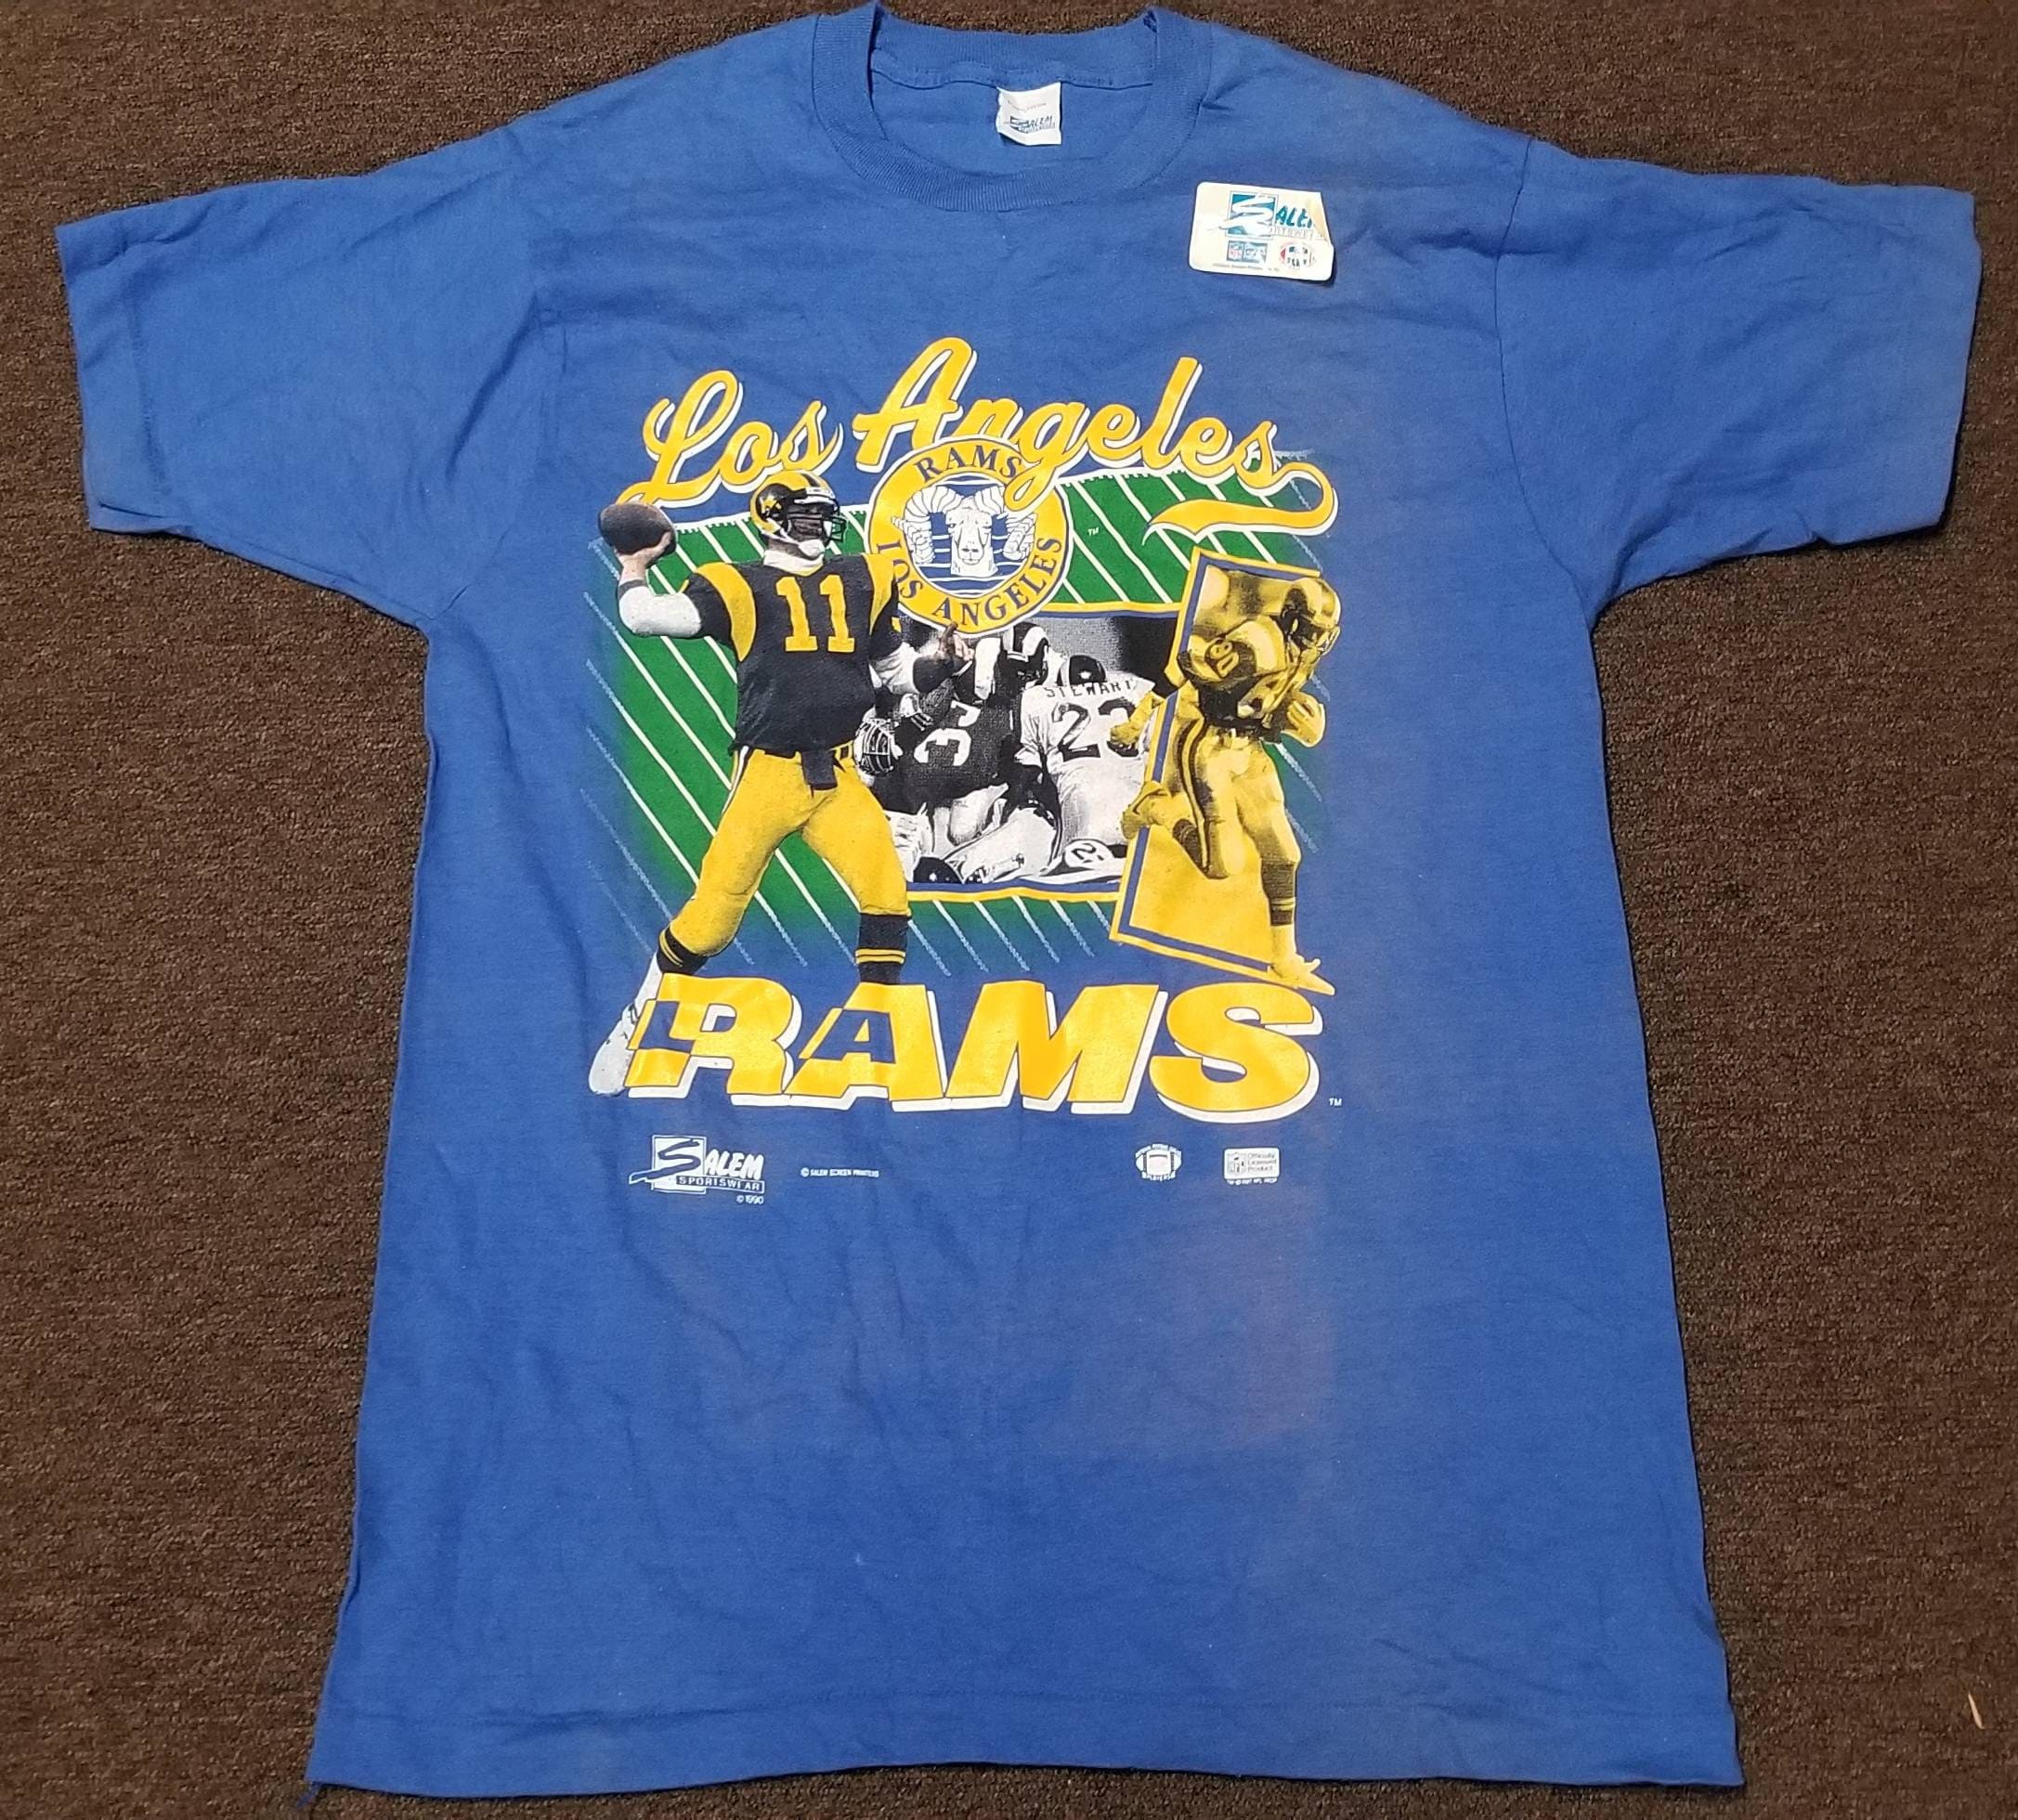 New Original Medium La Rams Shirt , 1990S Shirt, Vintage Nfl Los Angeles Rams Vintage